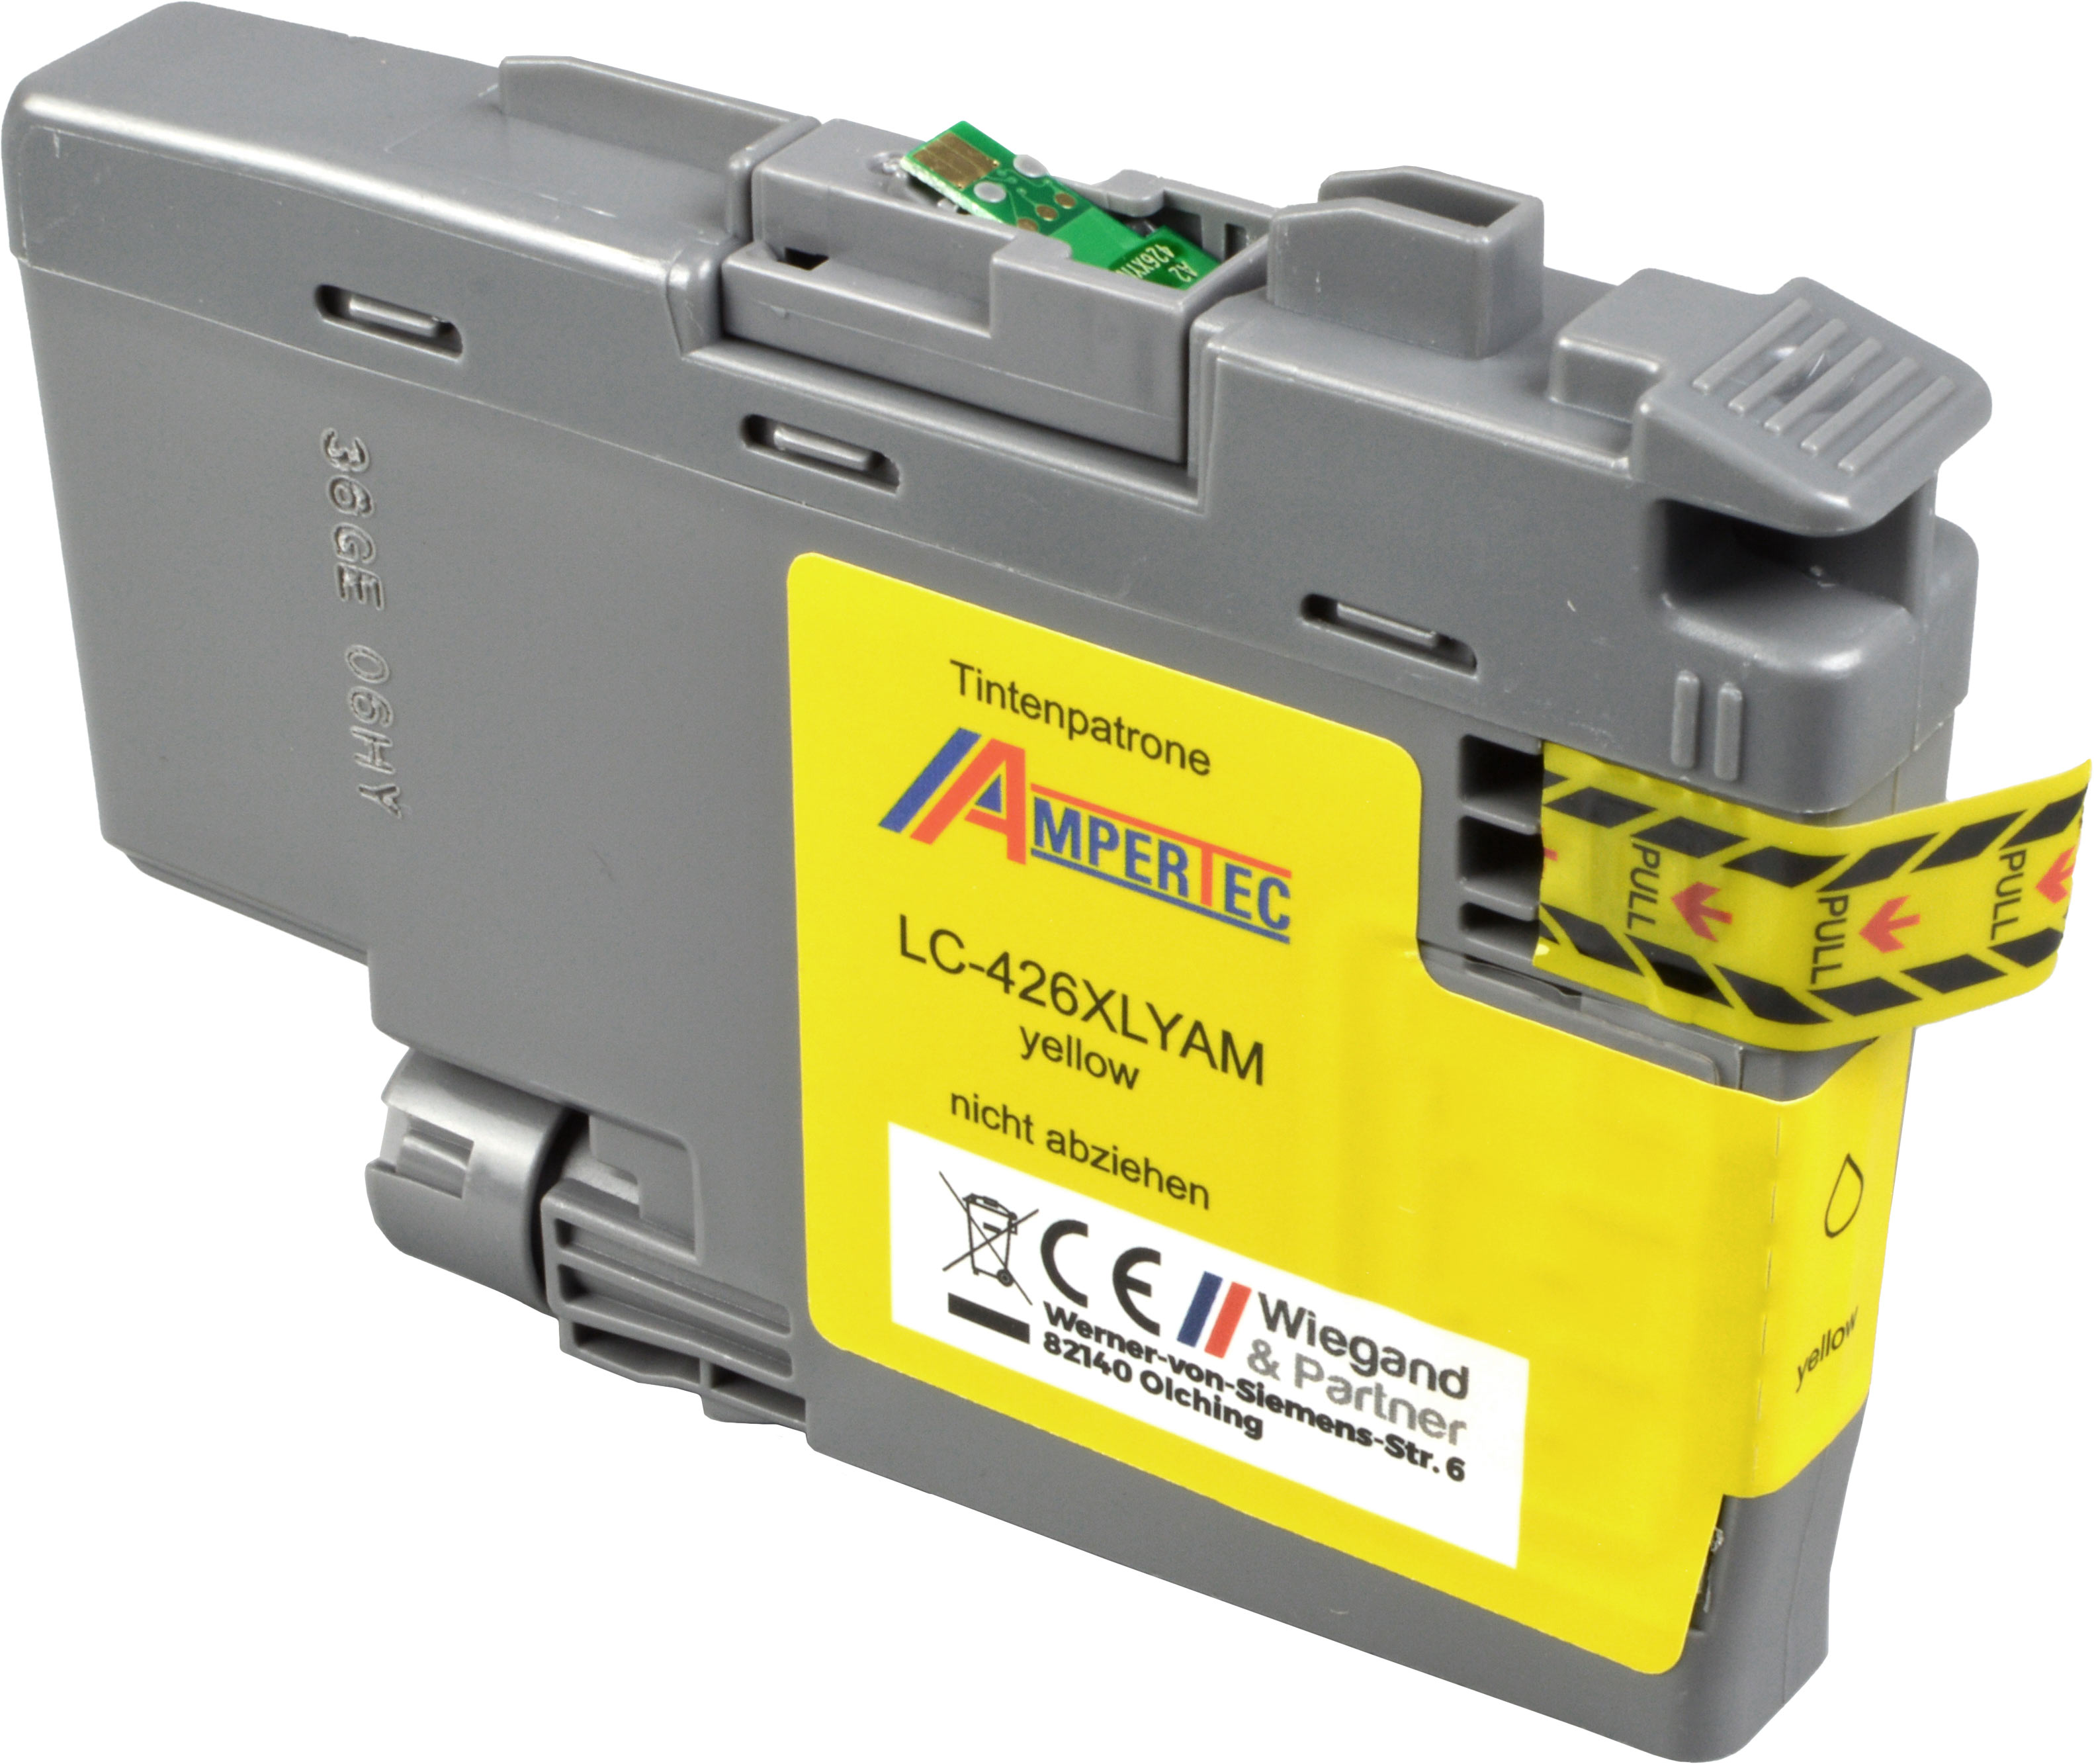 Ampertec Tinte kompatibel mit Brother LC-426XLY  yellow